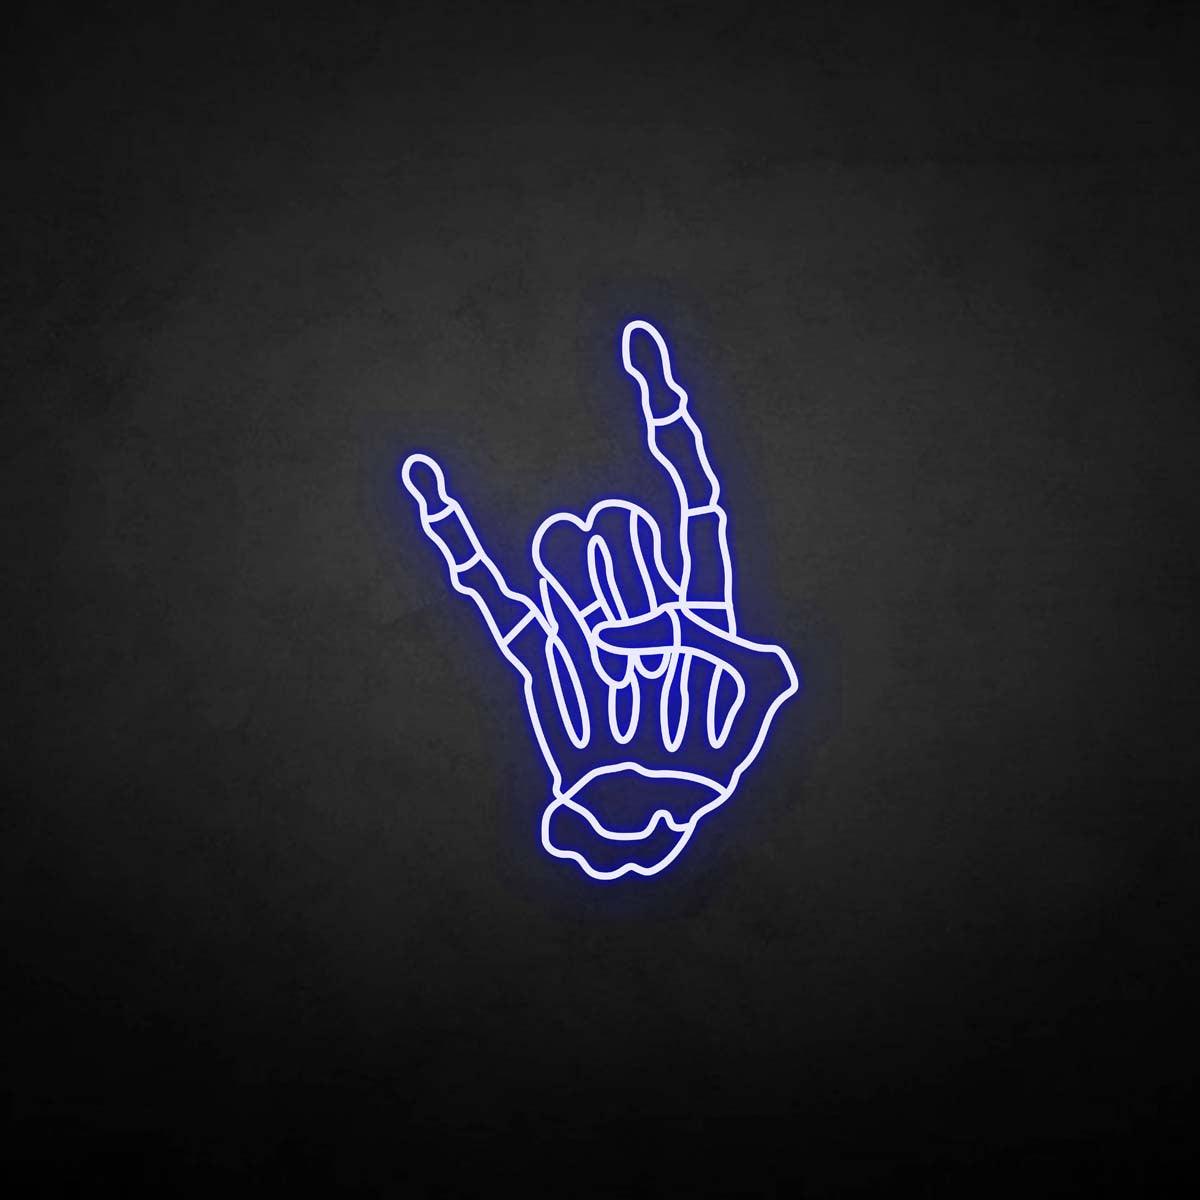 'Skeleton hand' neon sign